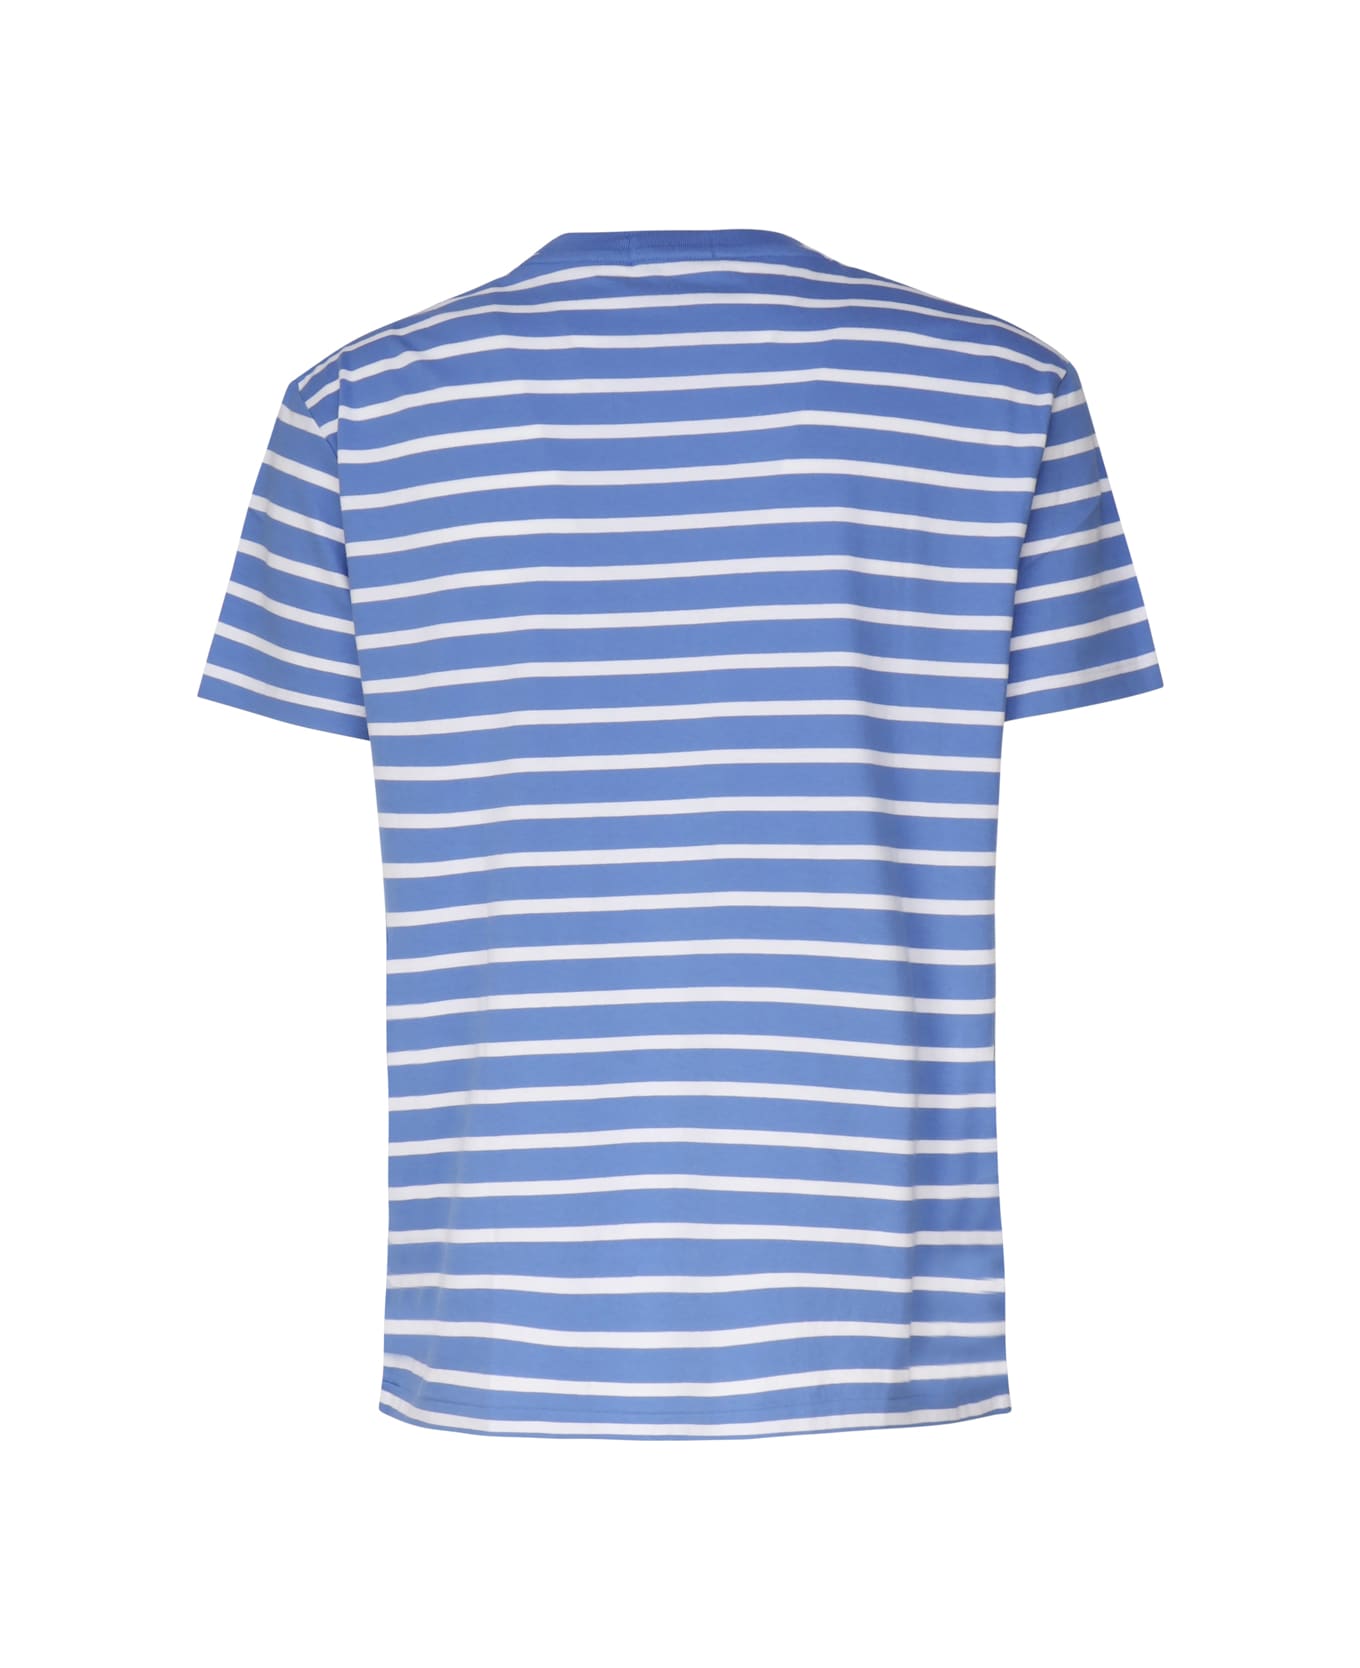 Polo Ralph Lauren Striped T-shirt - Light blue, white